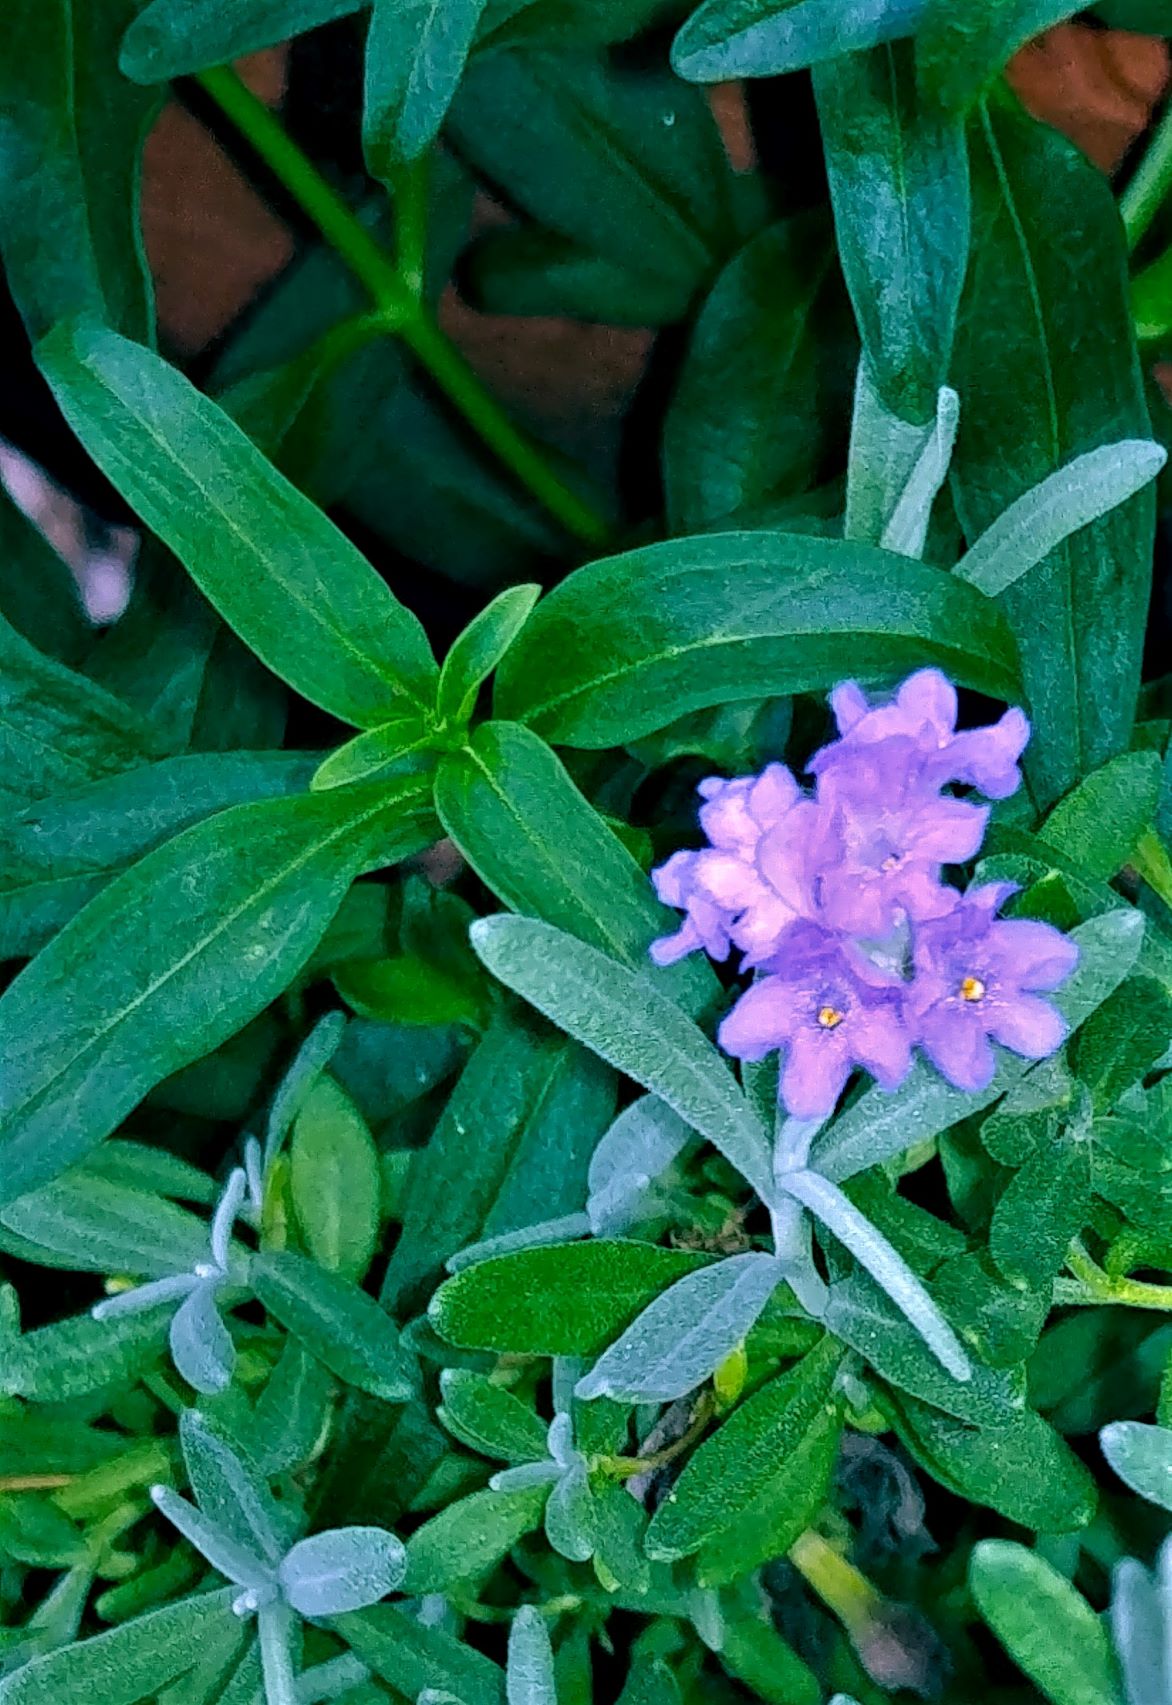 Lavender blooms